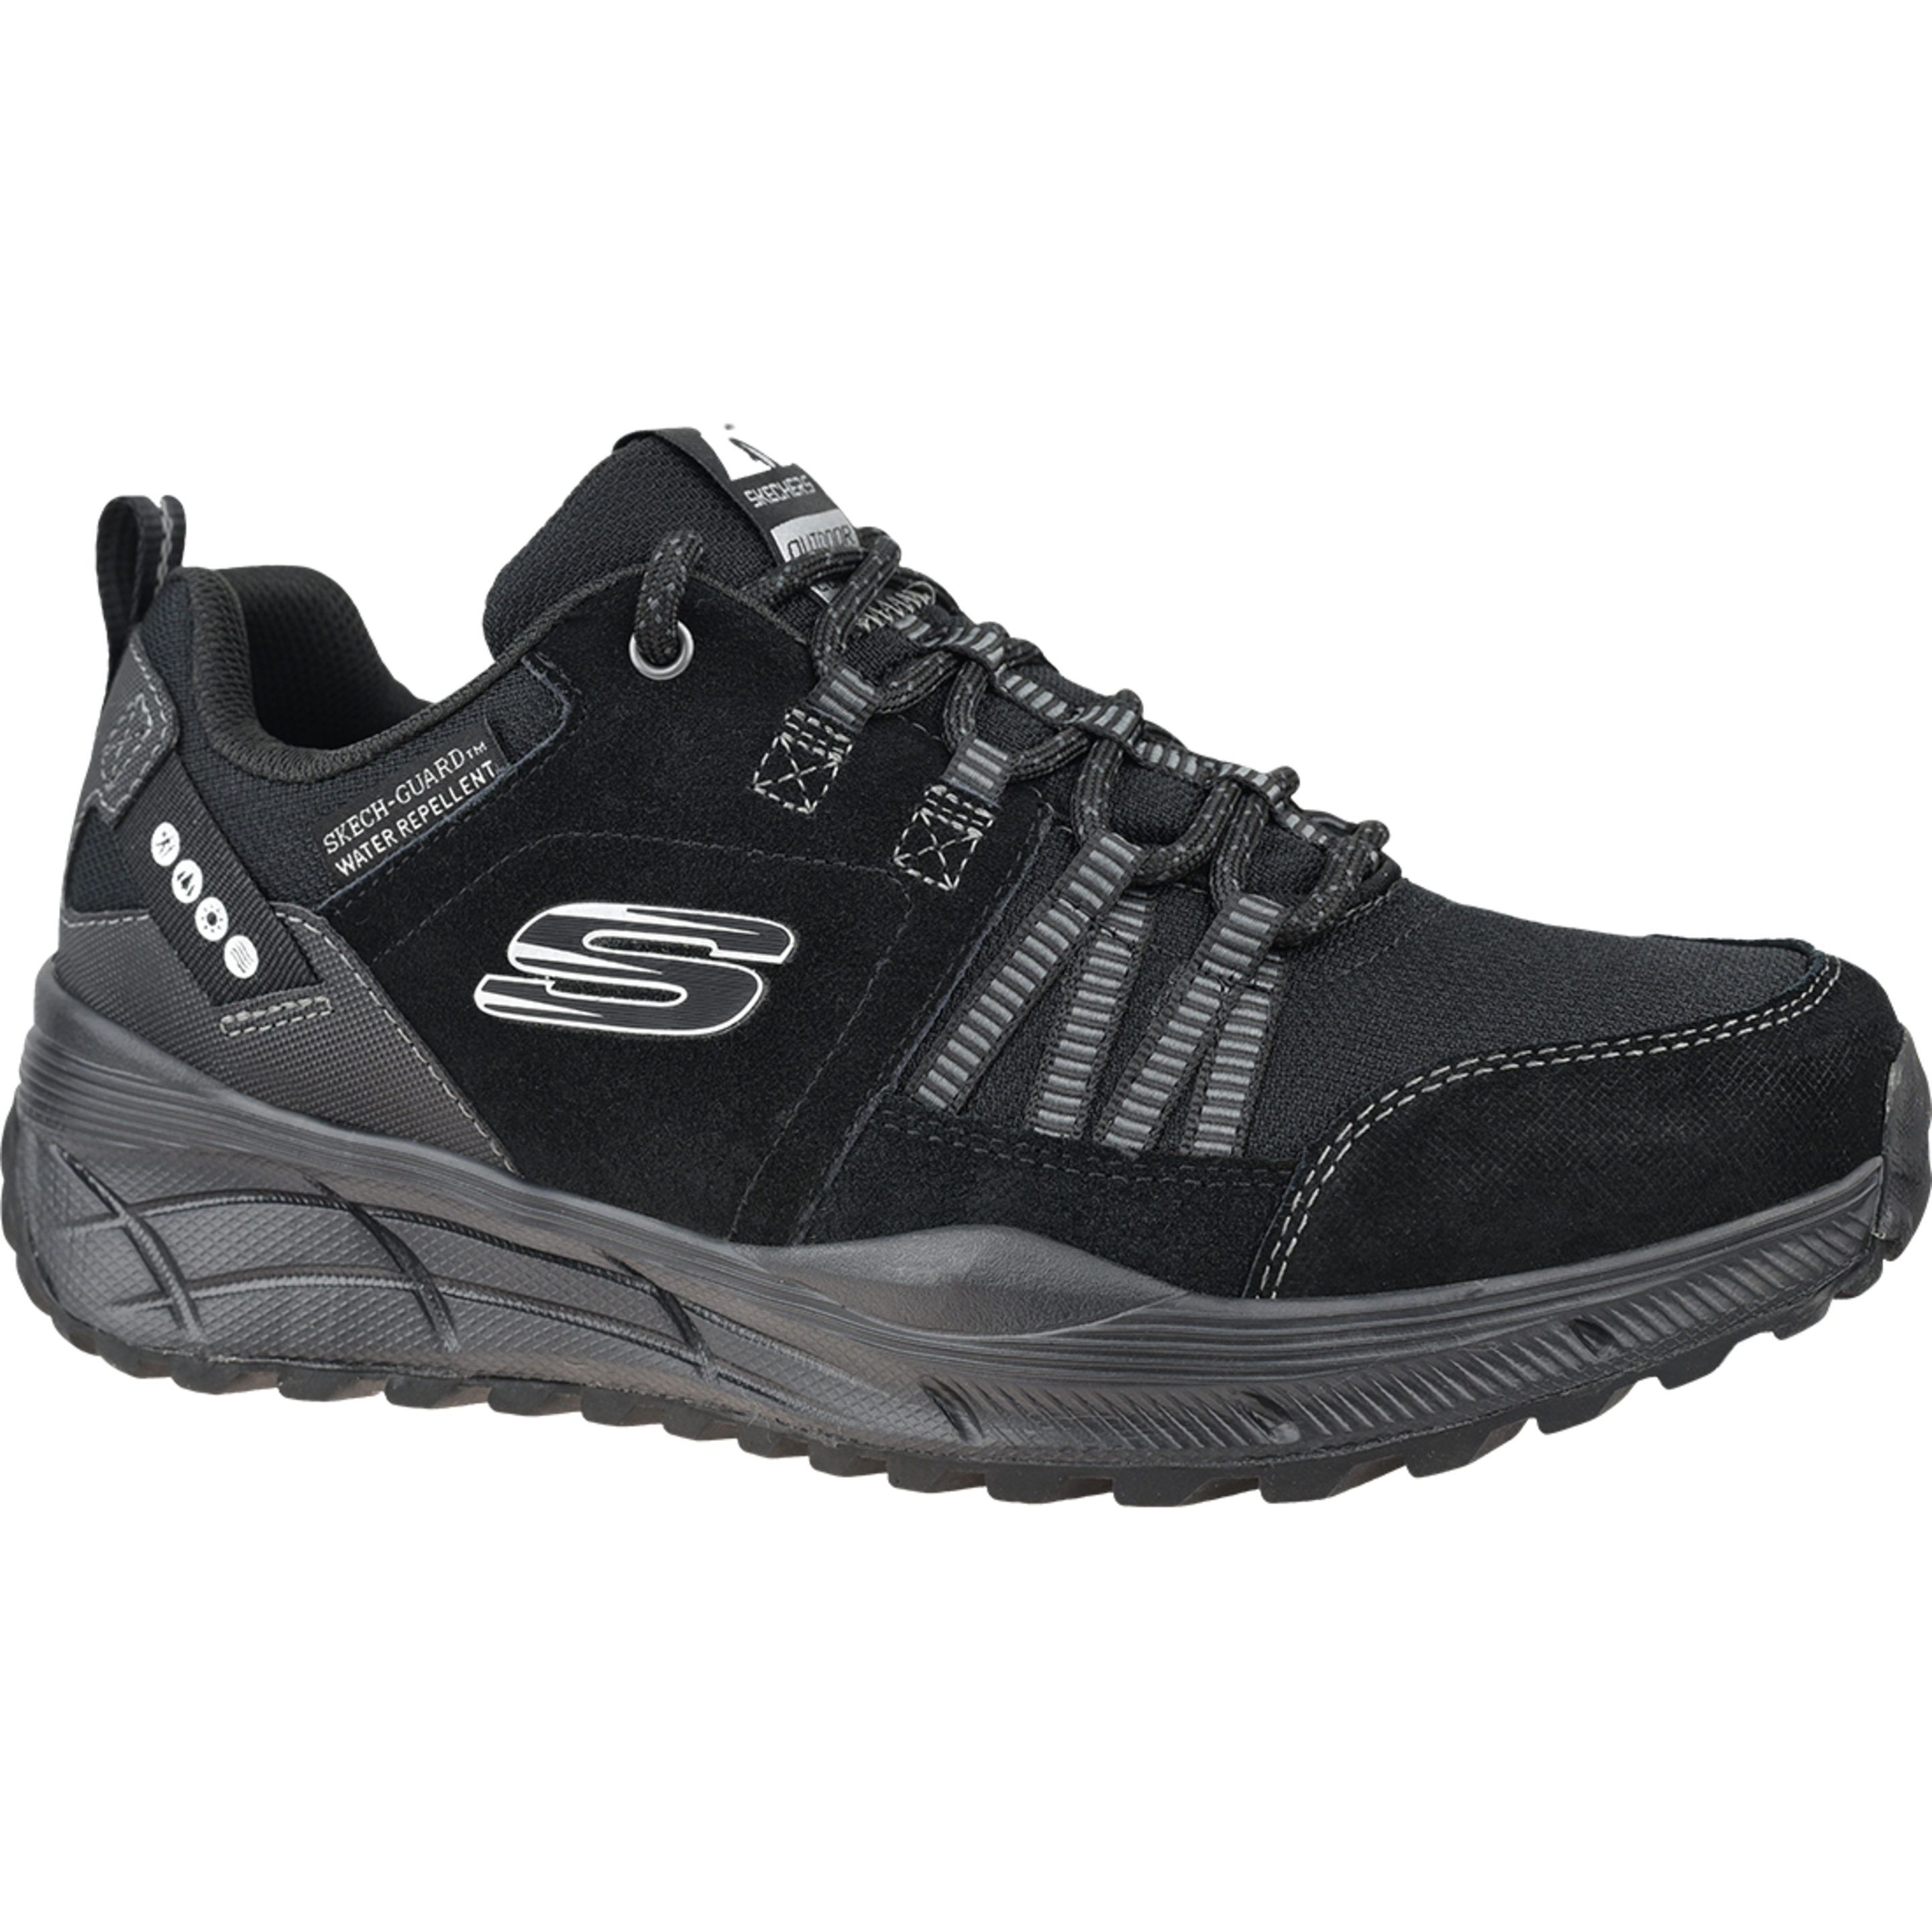 Zapatillas Skechers Equalizer 4.0 Trail 237023-bbk - negro - 